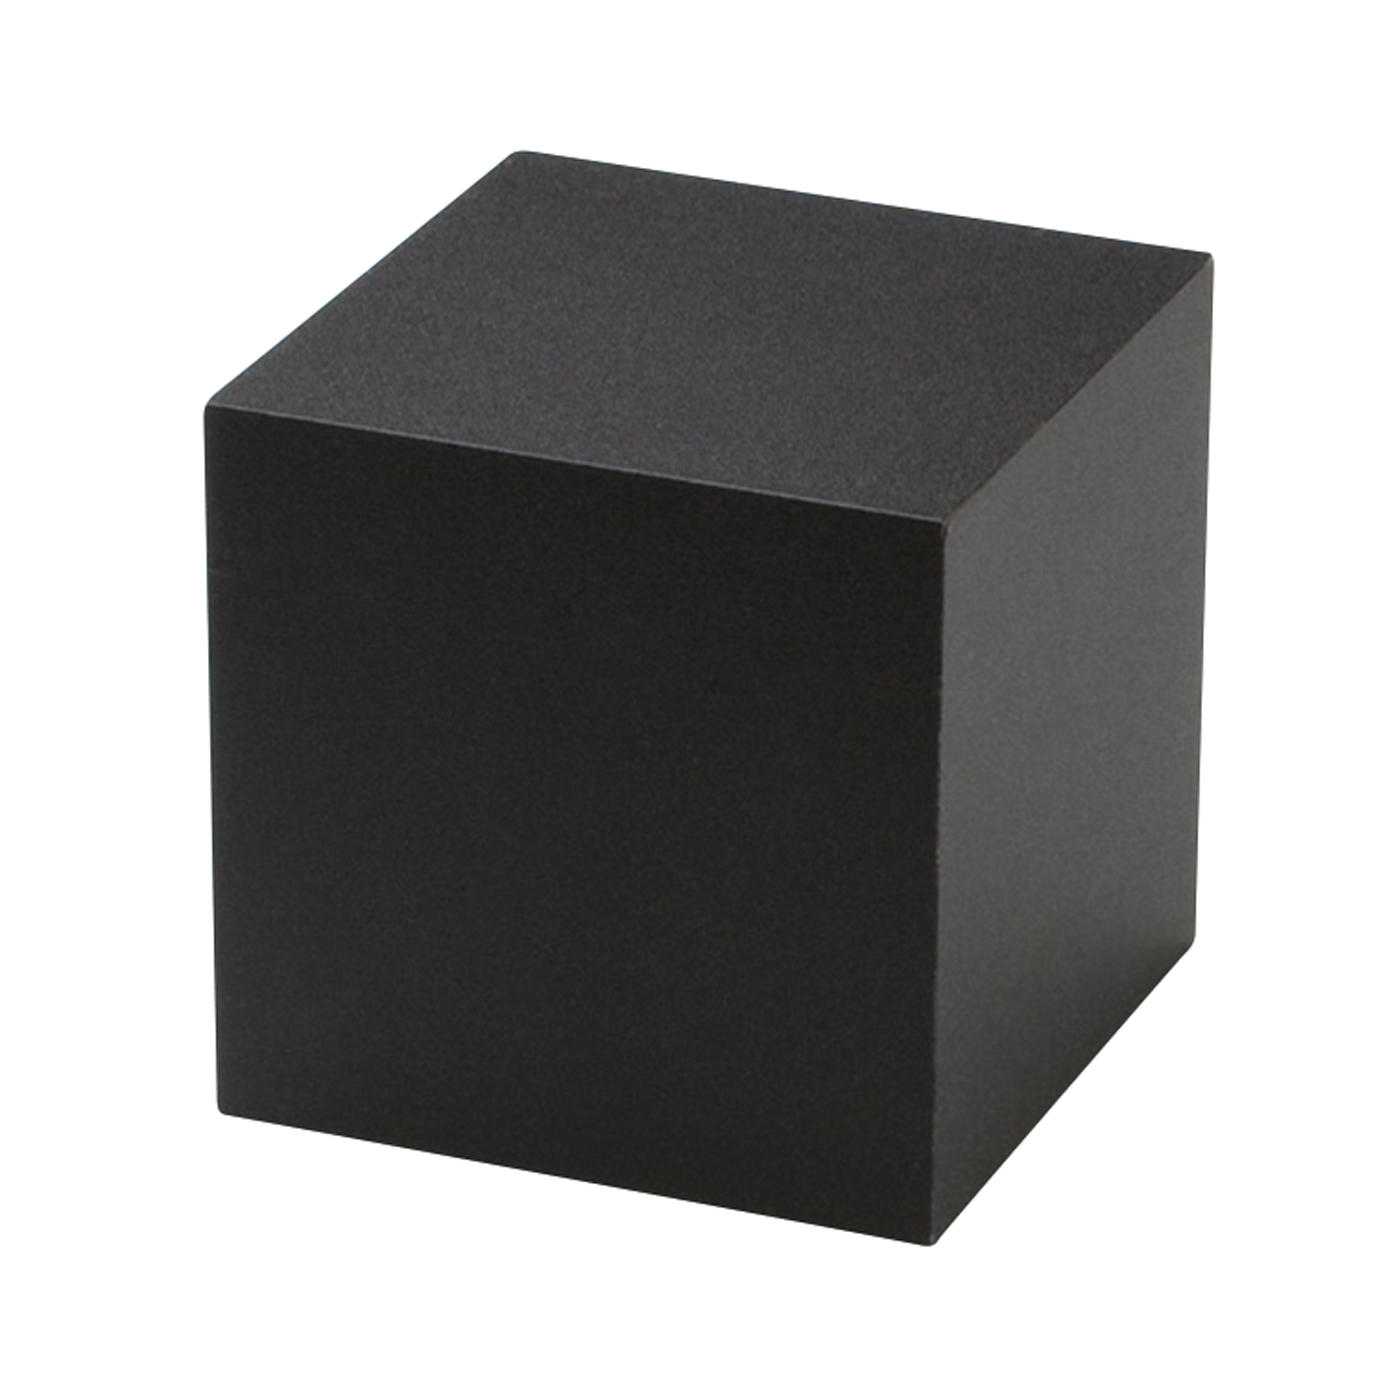 PICA-Design Schmucketui "Blackbox", 90 x 90 x 90 mm - 1 Stück